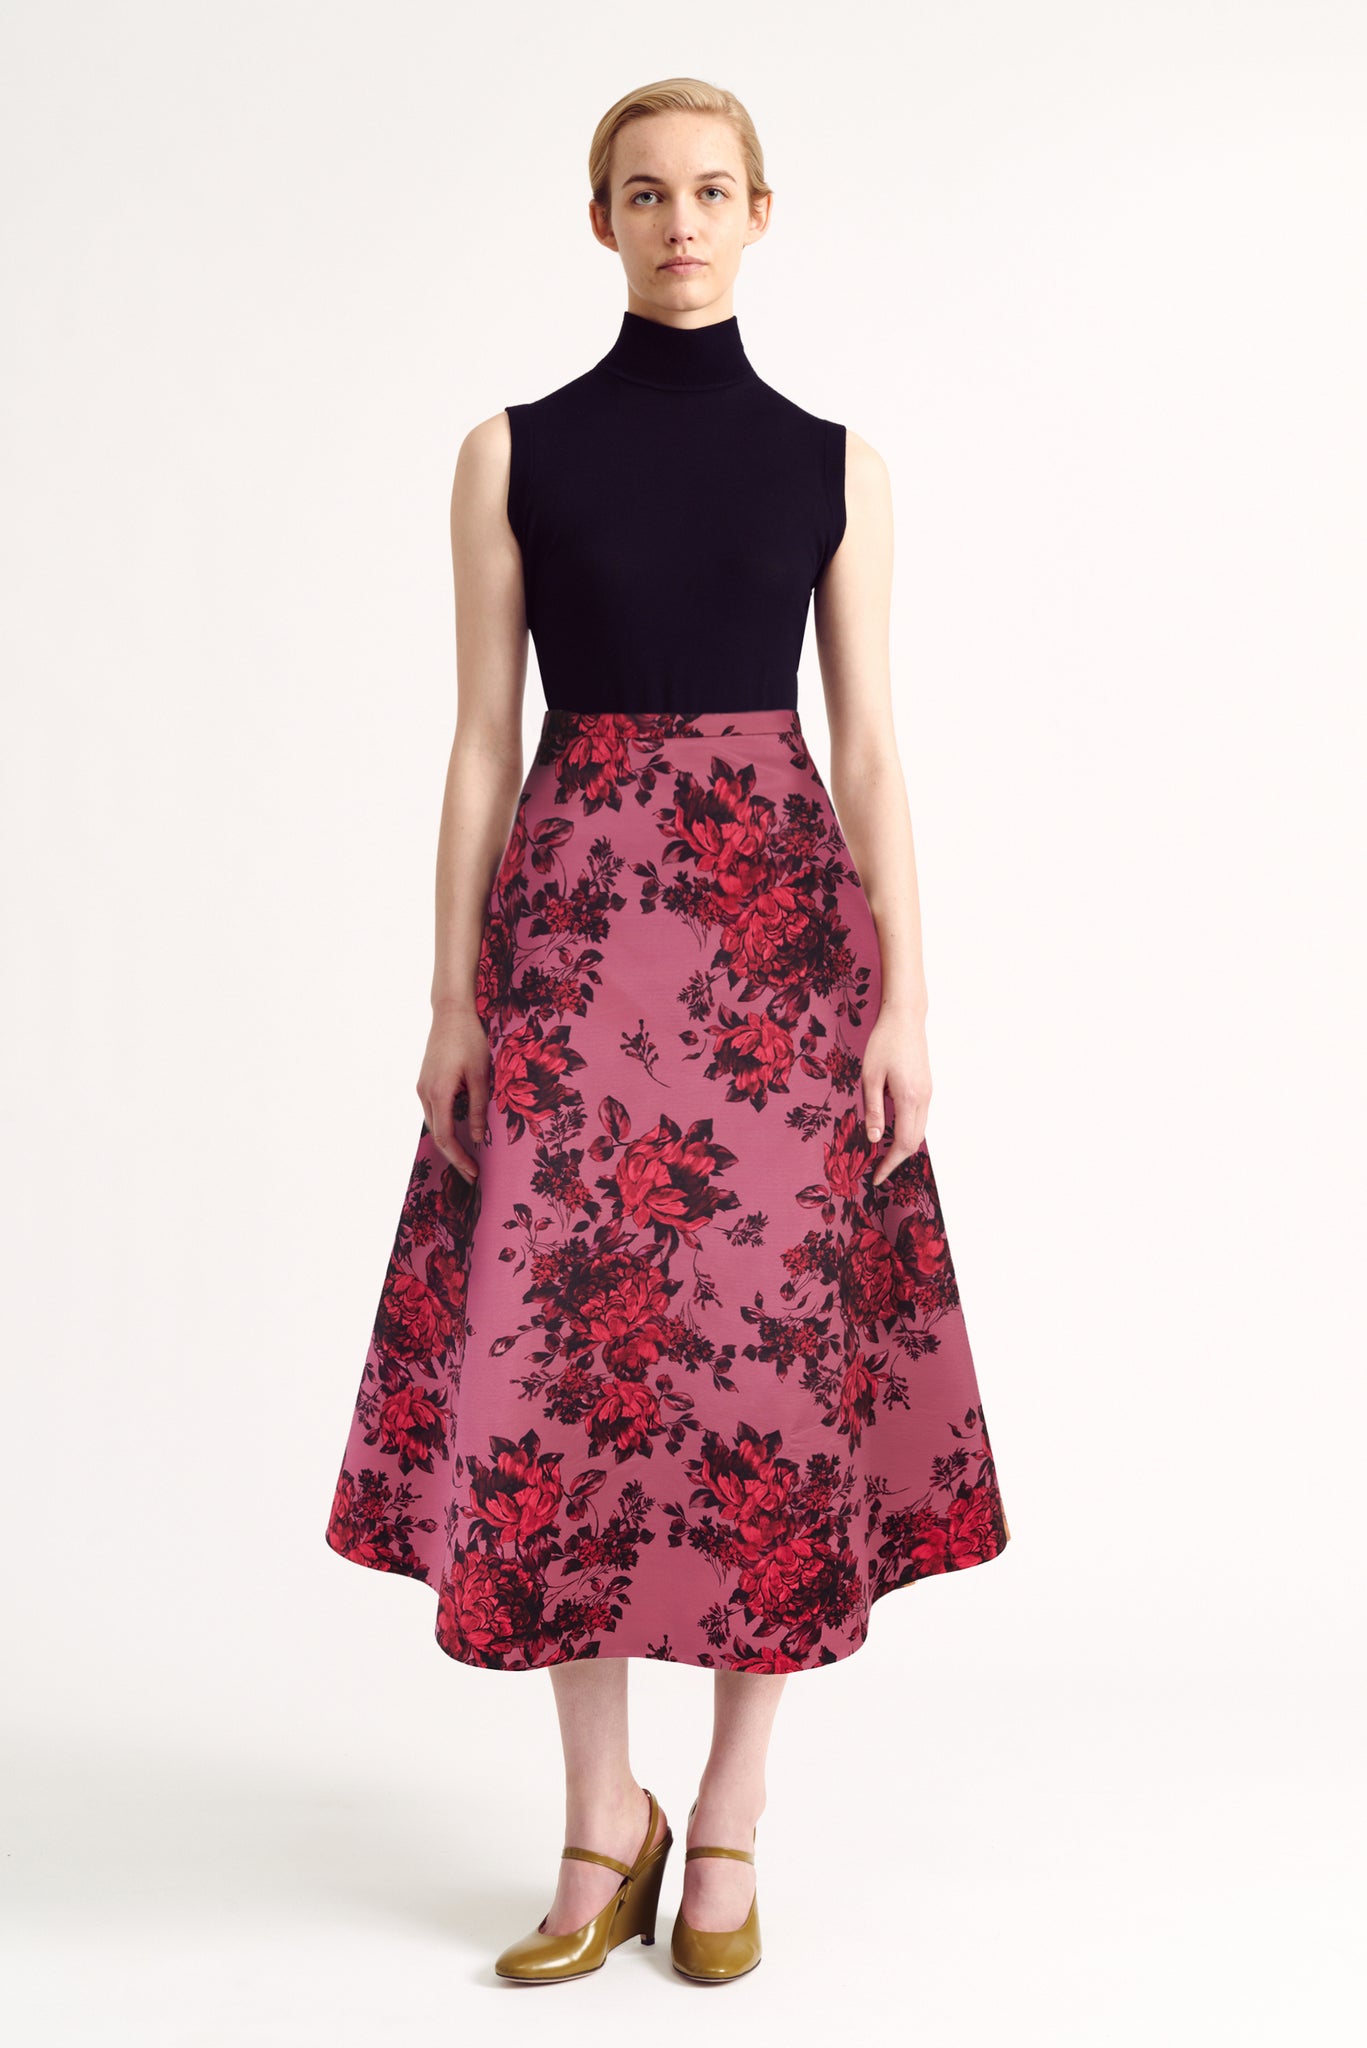 Hersilia Mauve Pink Festive Bouquet Taffeta Faille Skirt | Emilia Wickstead